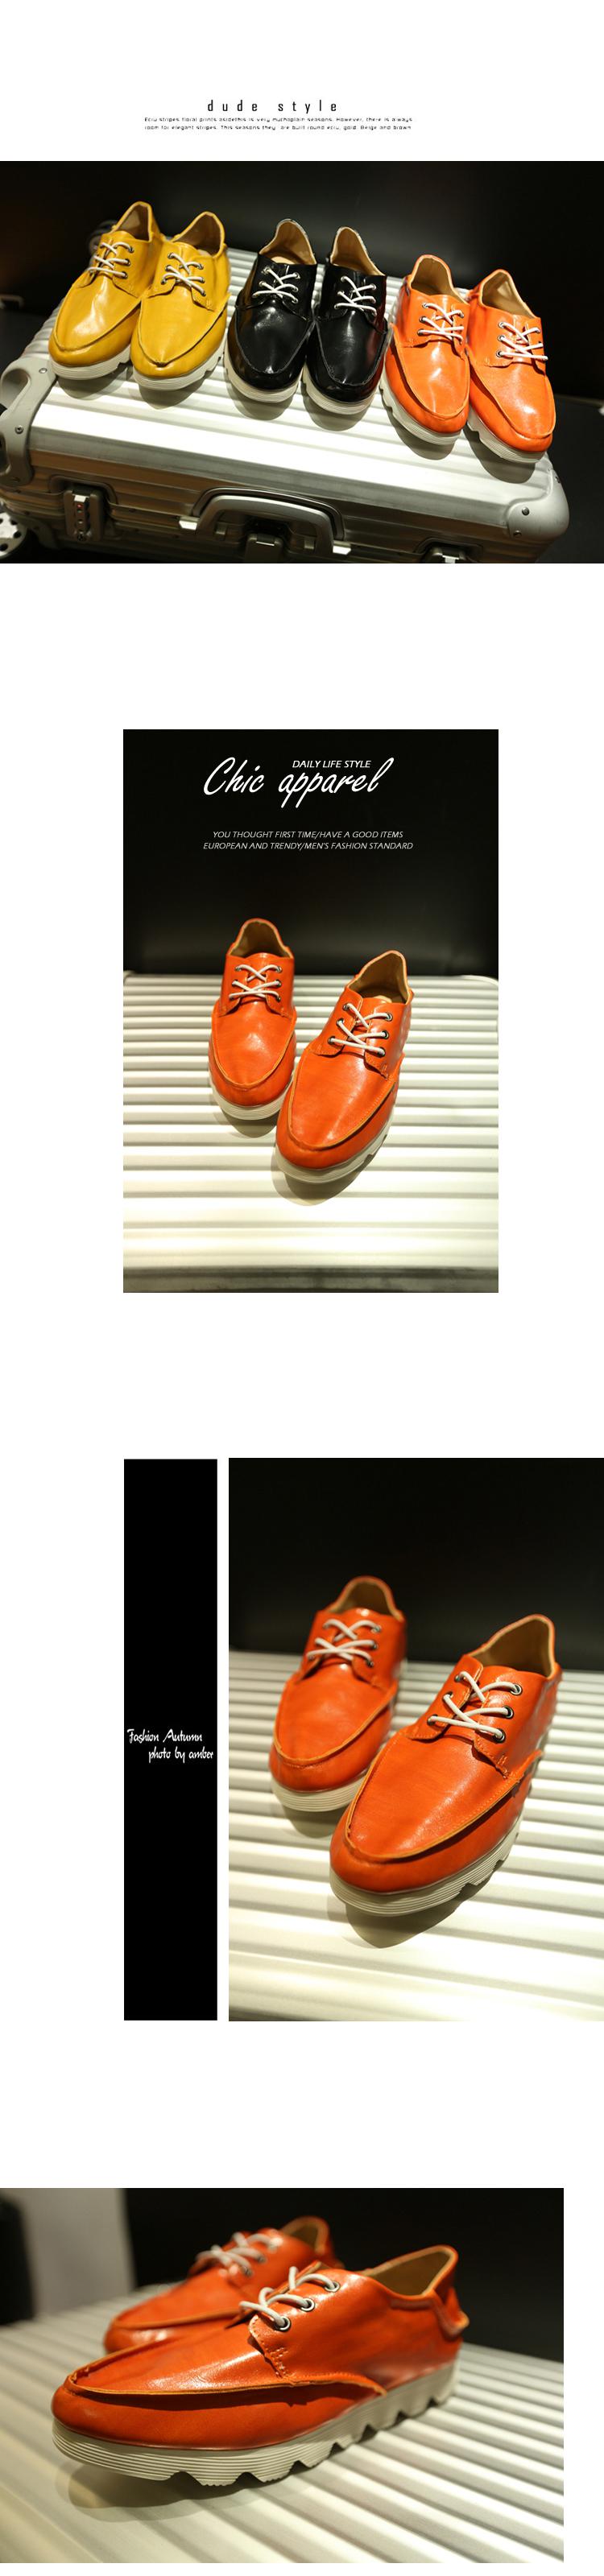 Mr.benyou 2014正品新款时尚韩版潮流行潮流休闲纯色透气鞋英伦皮鞋H508-XDQ7171